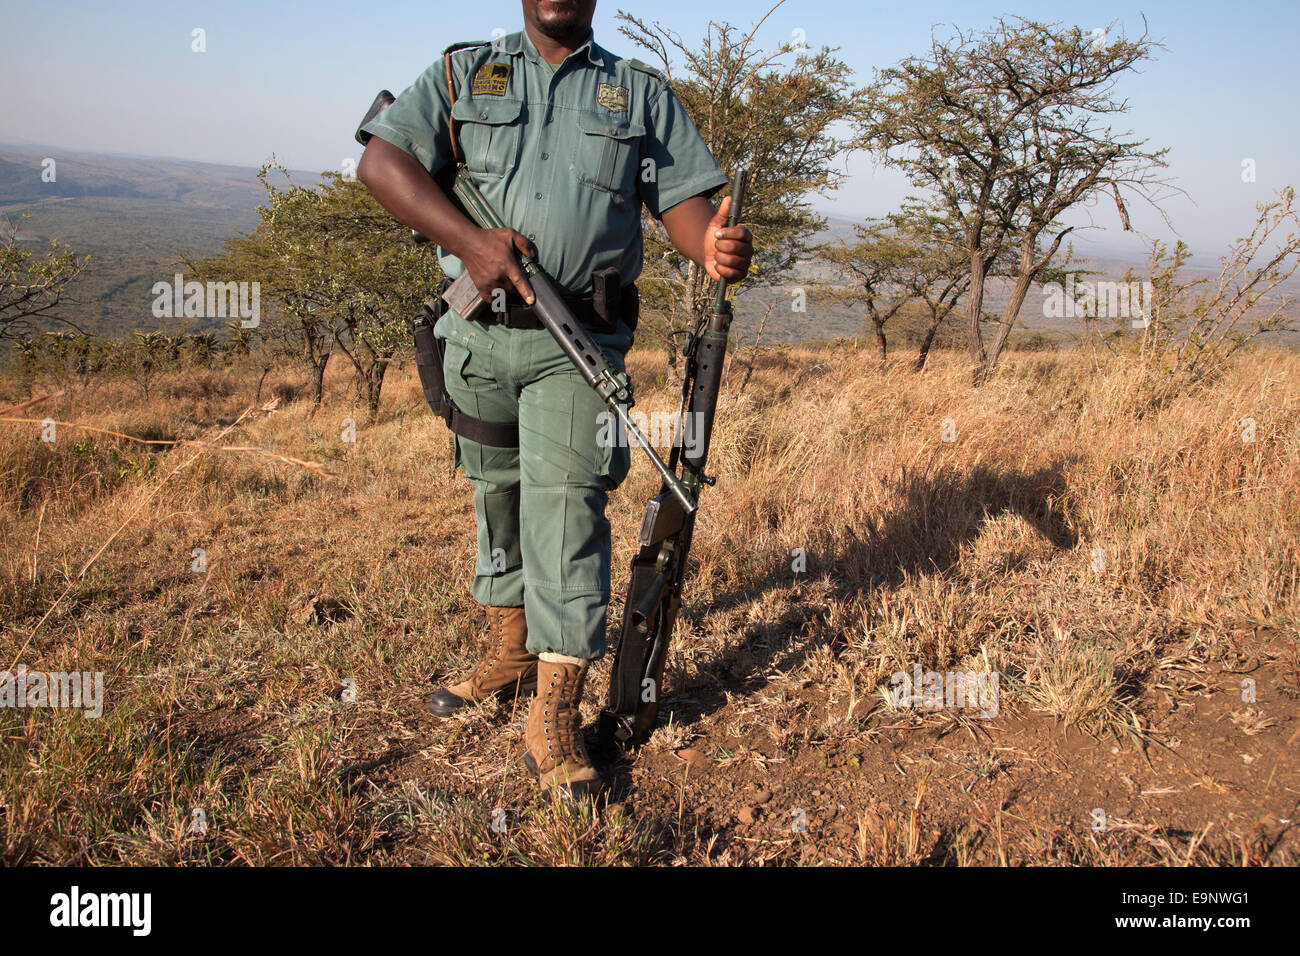 Anti-Wilderer-Einheit Ezemvelo KZN Wildlife-Mitglied iMfolozi Wildreservat, Südafrika Stockfoto